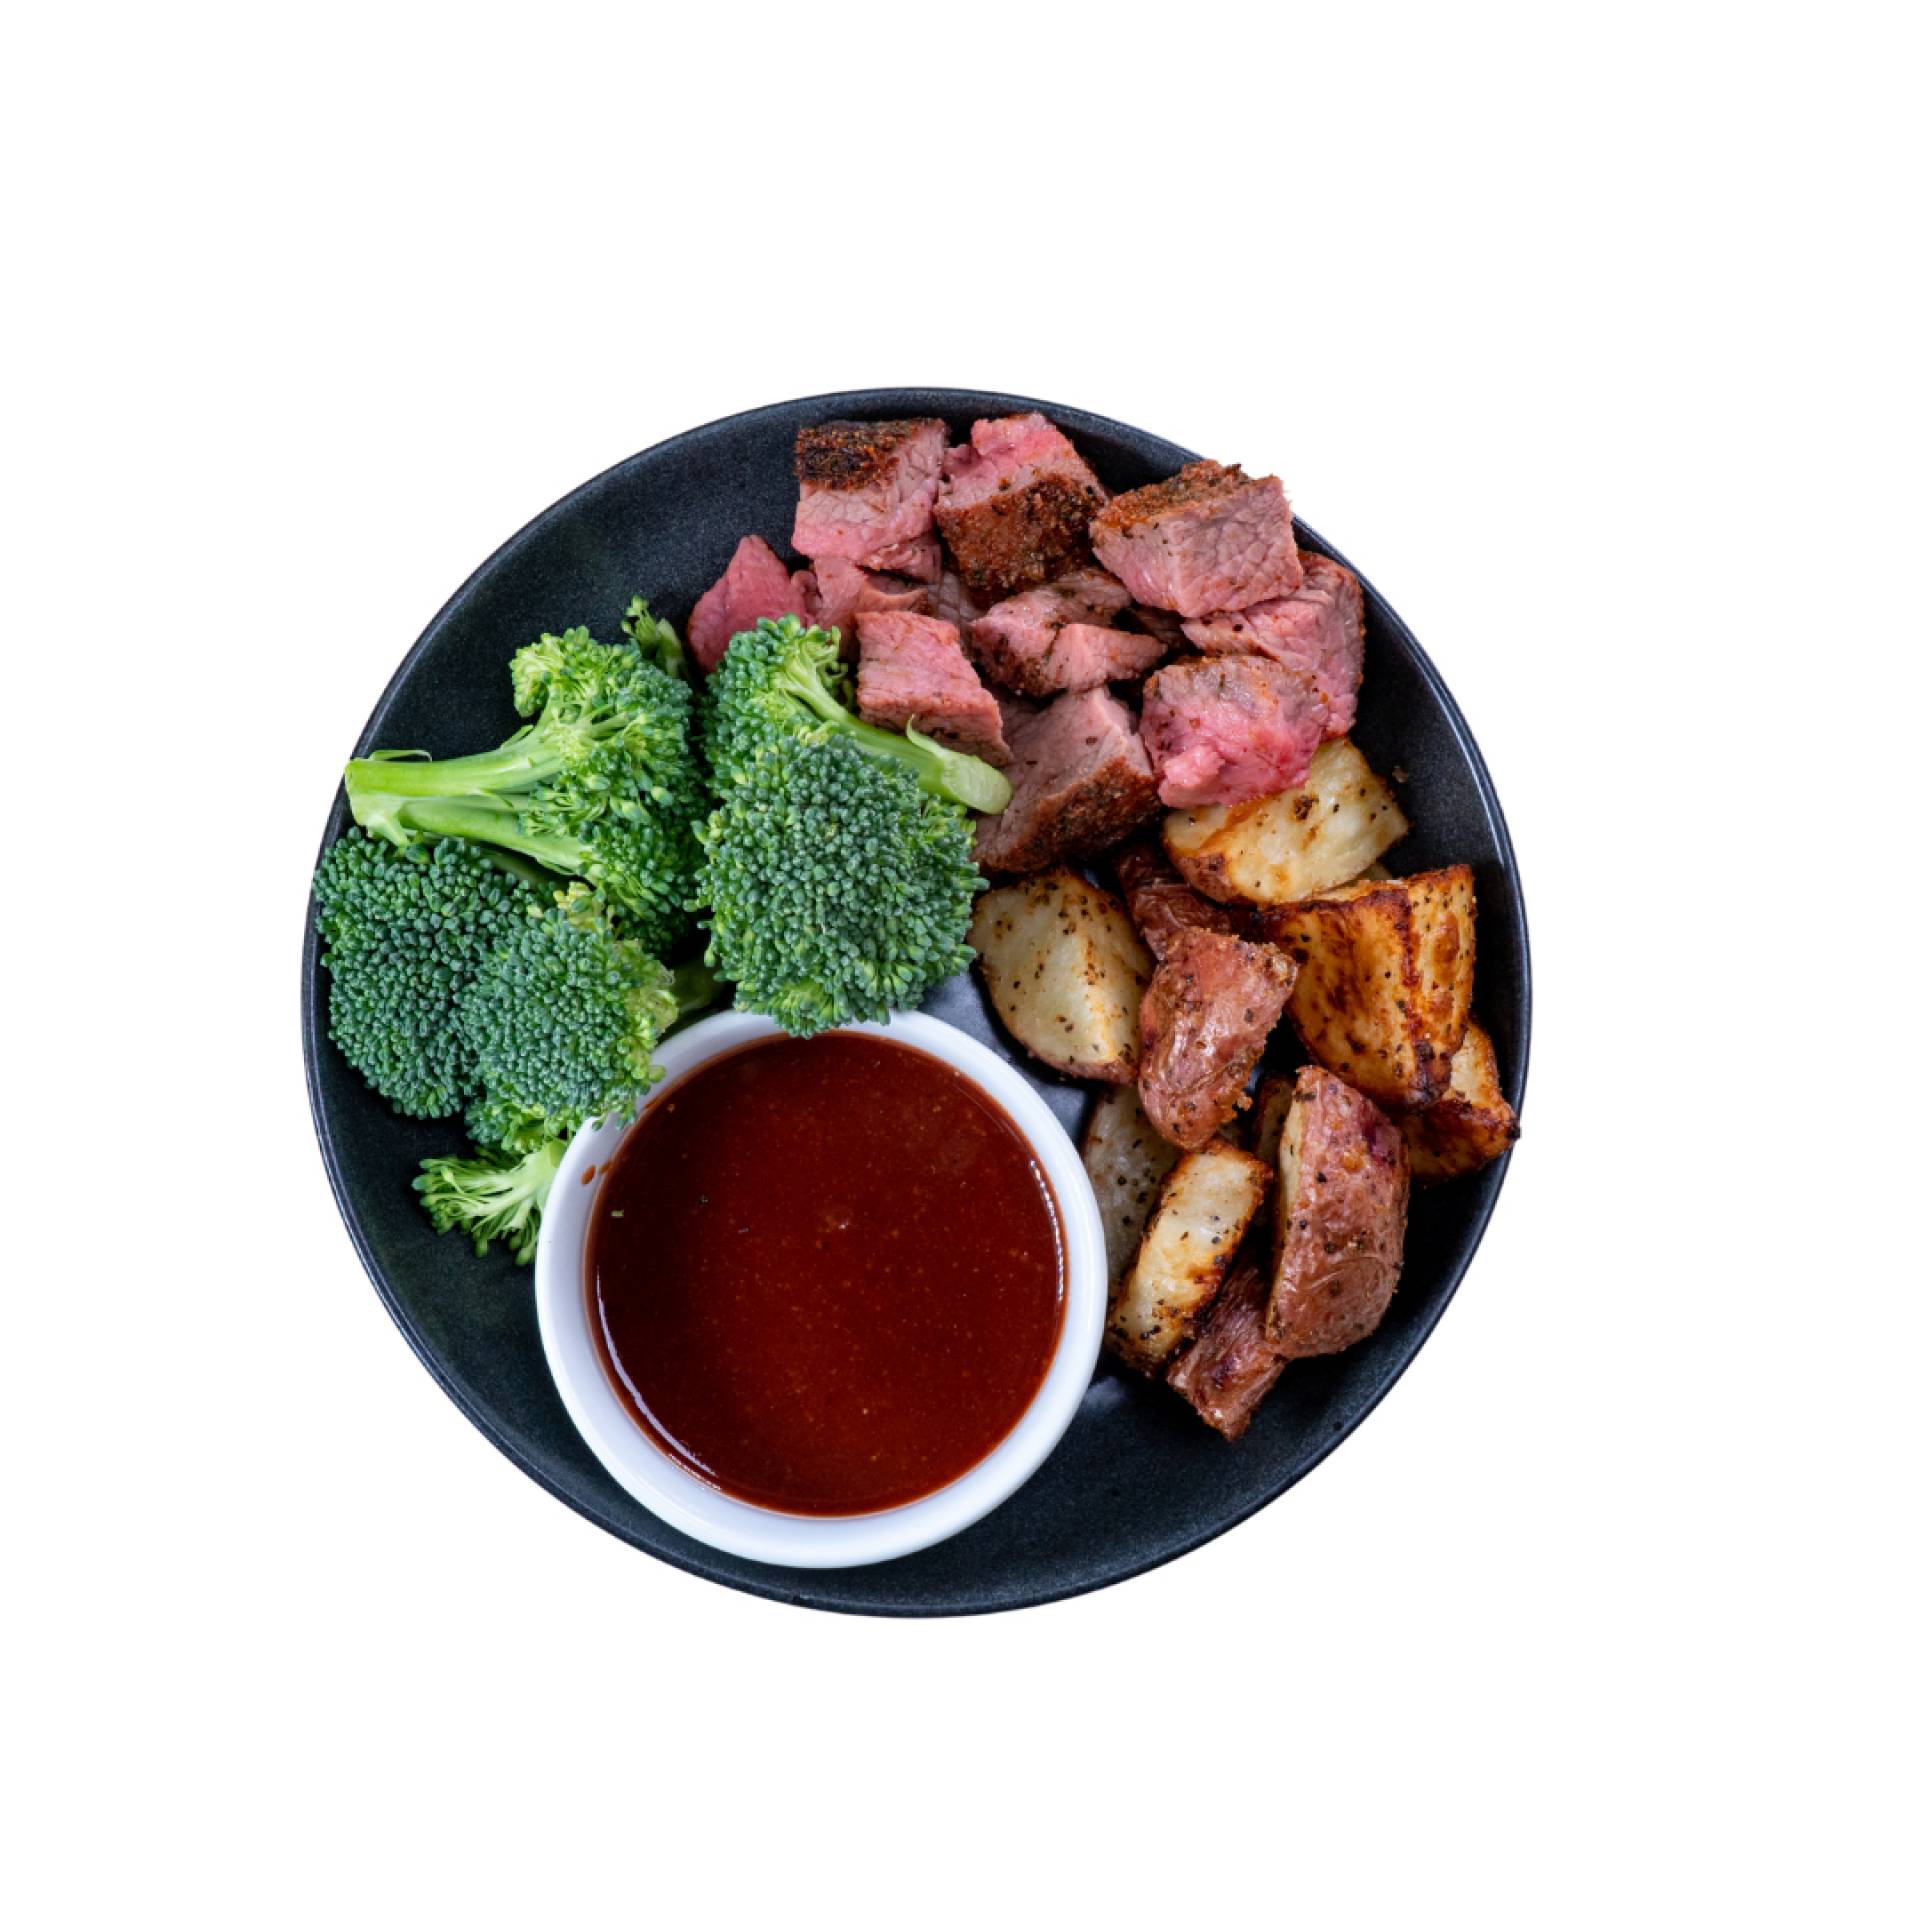 (SMALL) Balsamic Steak + Red Potatoes + Broccoli